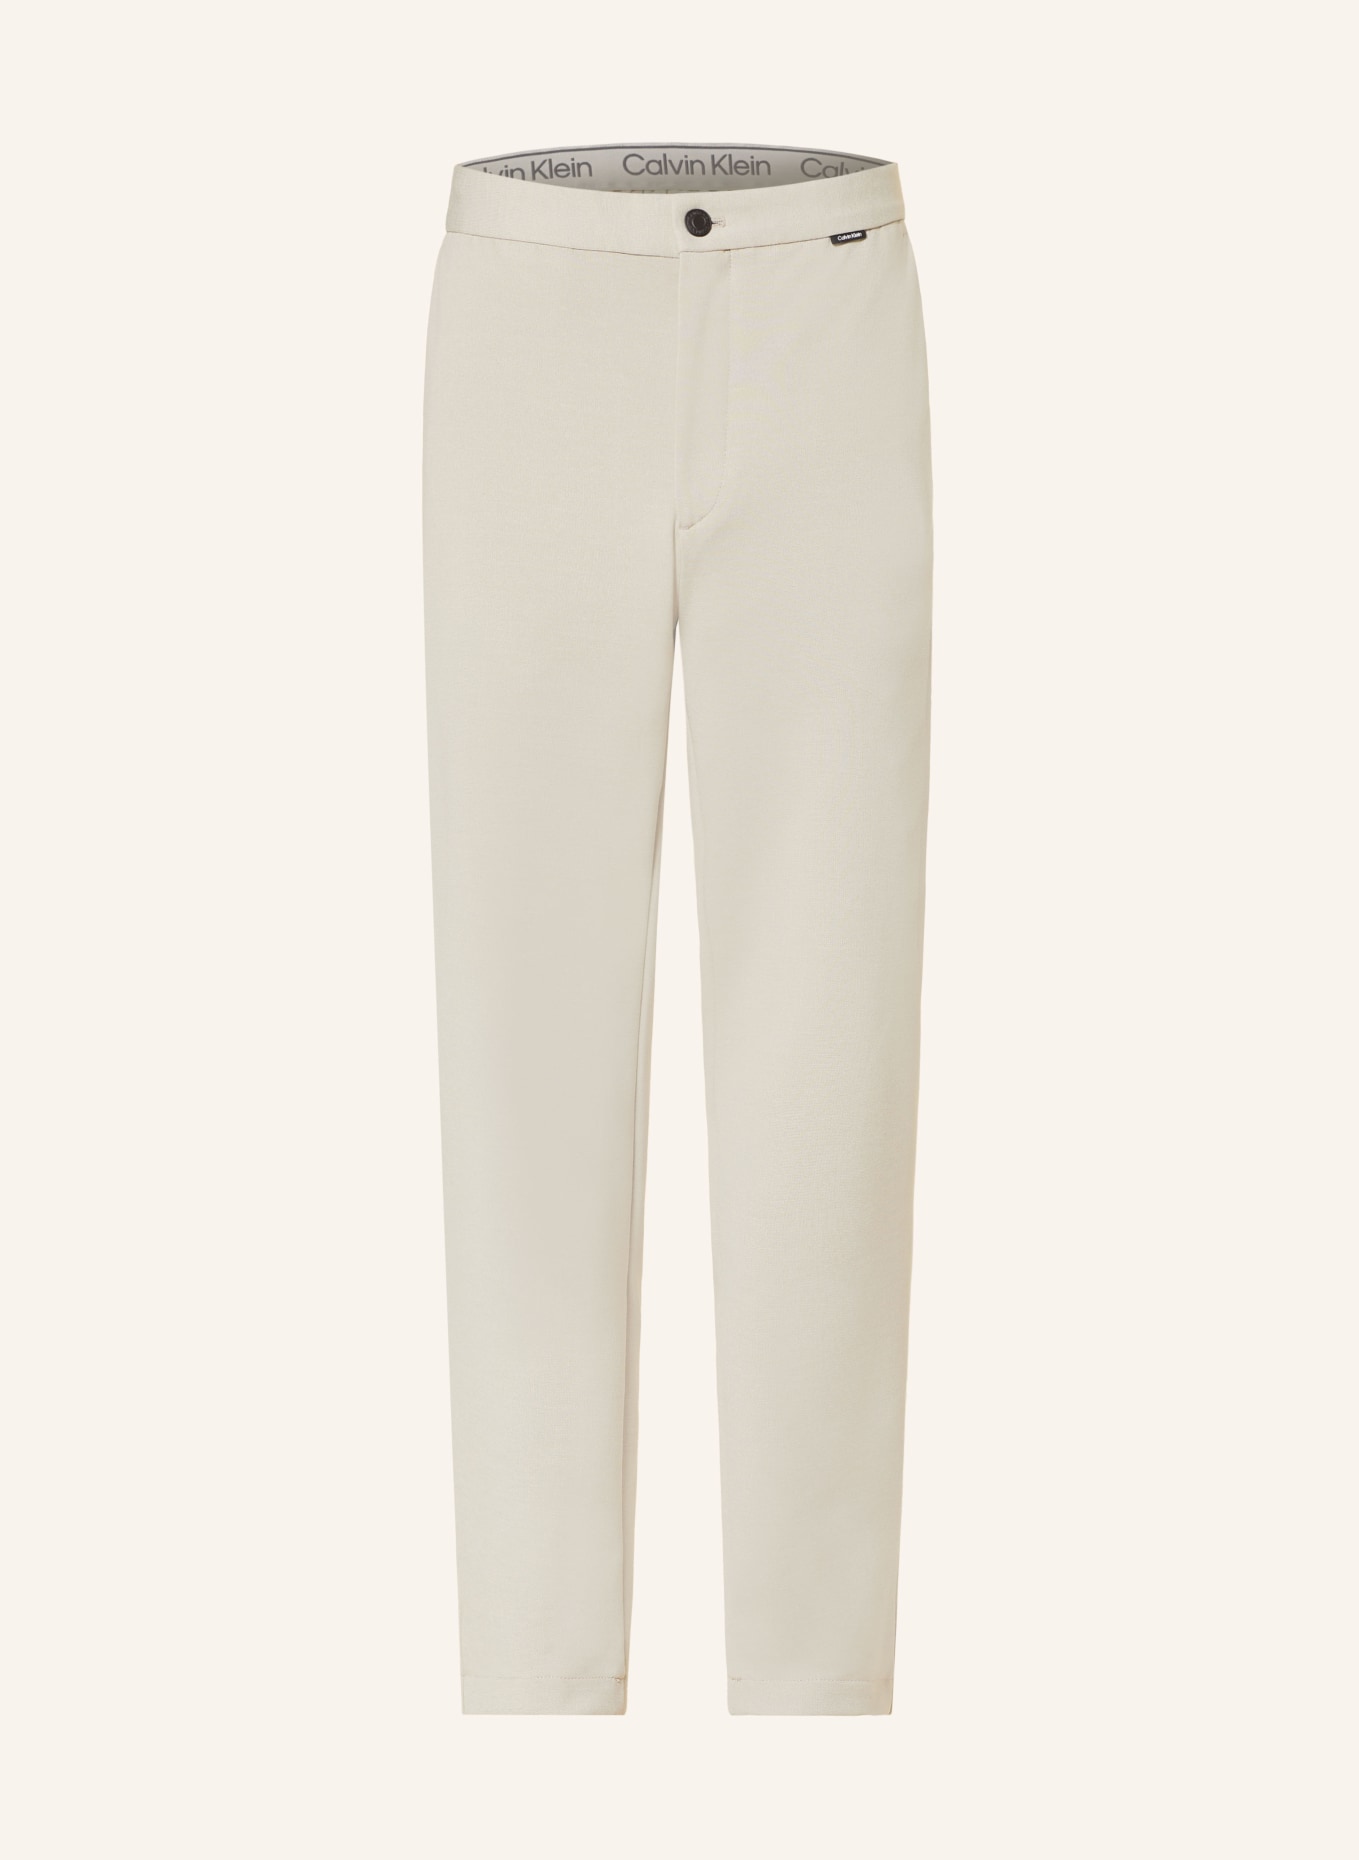 Calvin Klein Jerseyhose Tapered Fit, Farbe: ACE Stony Beige (Bild 1)